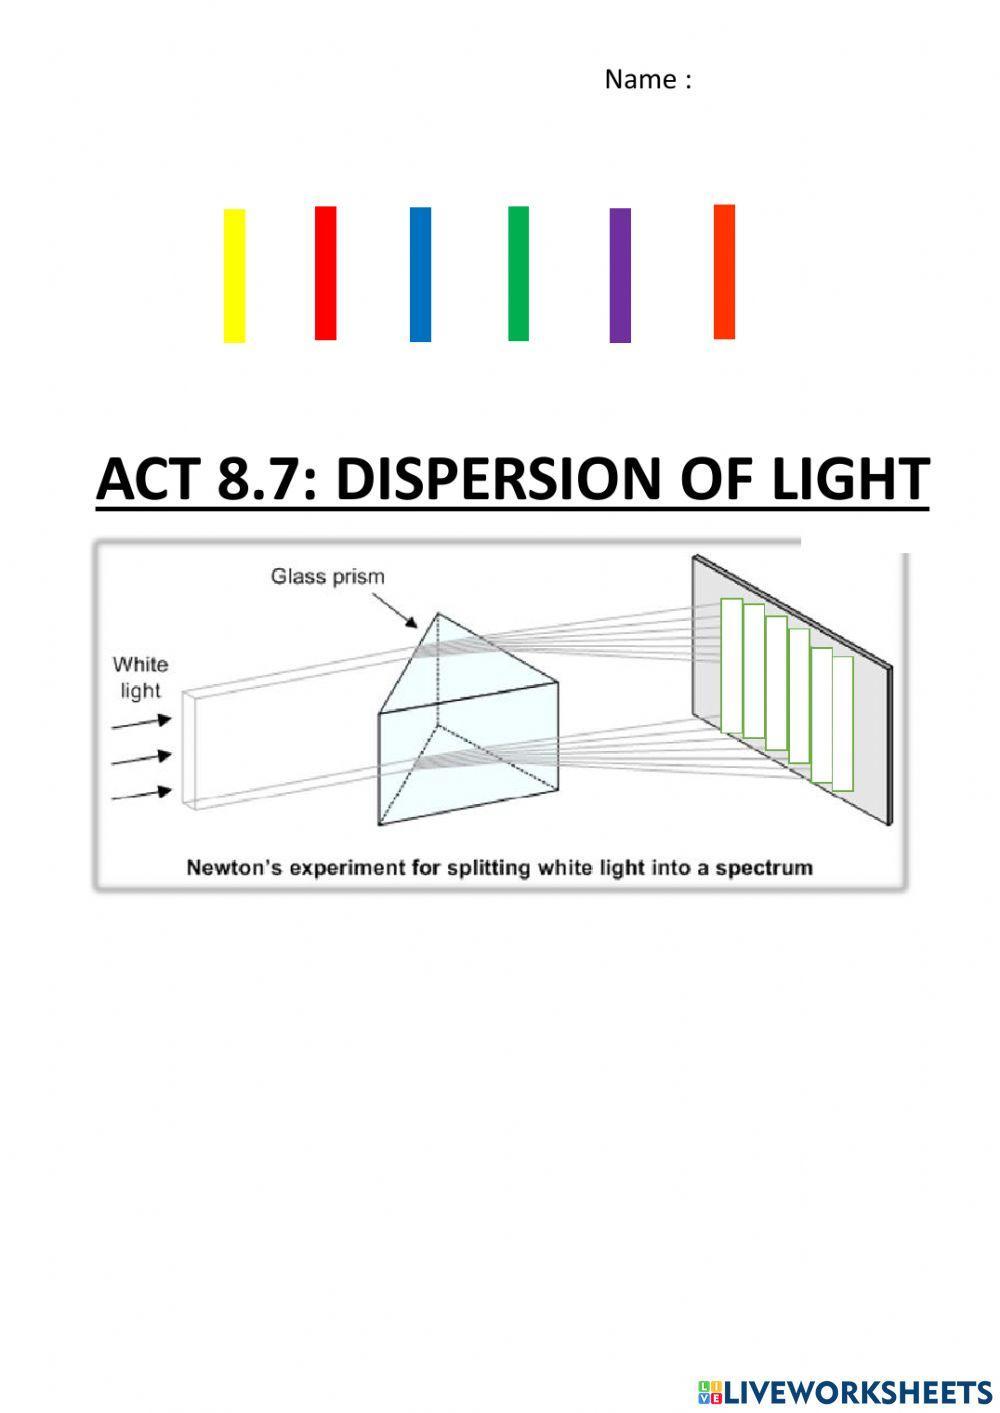 Dispersion of light